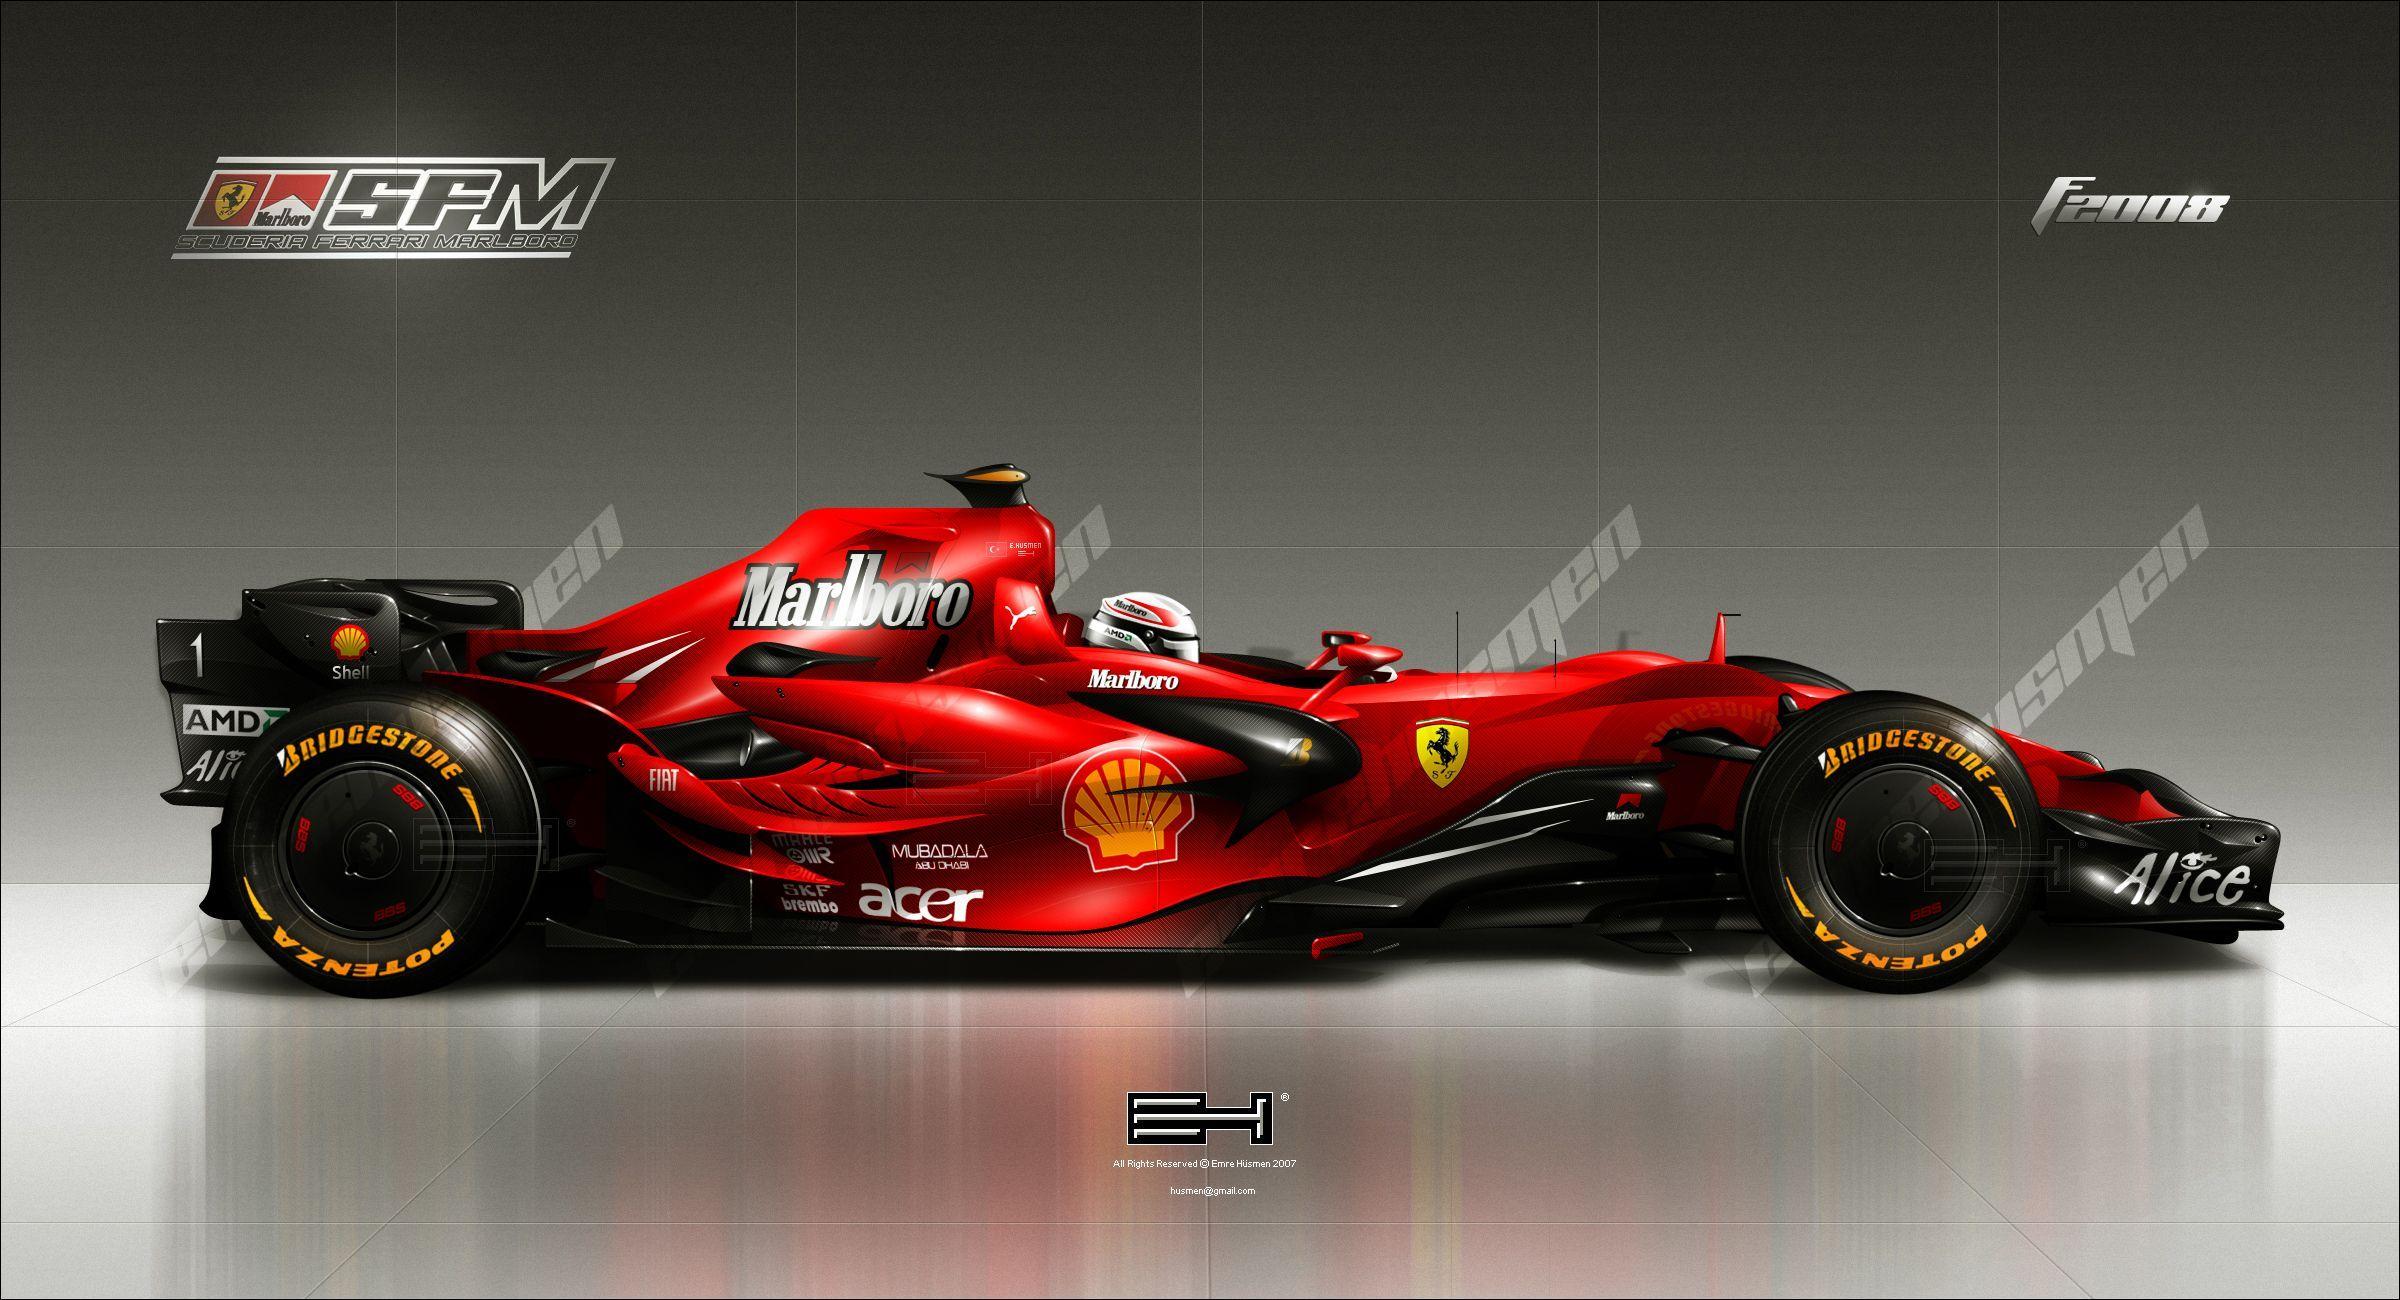 F1 Ferrari Wallpaper, Background For iPhone, Desktop, HTC